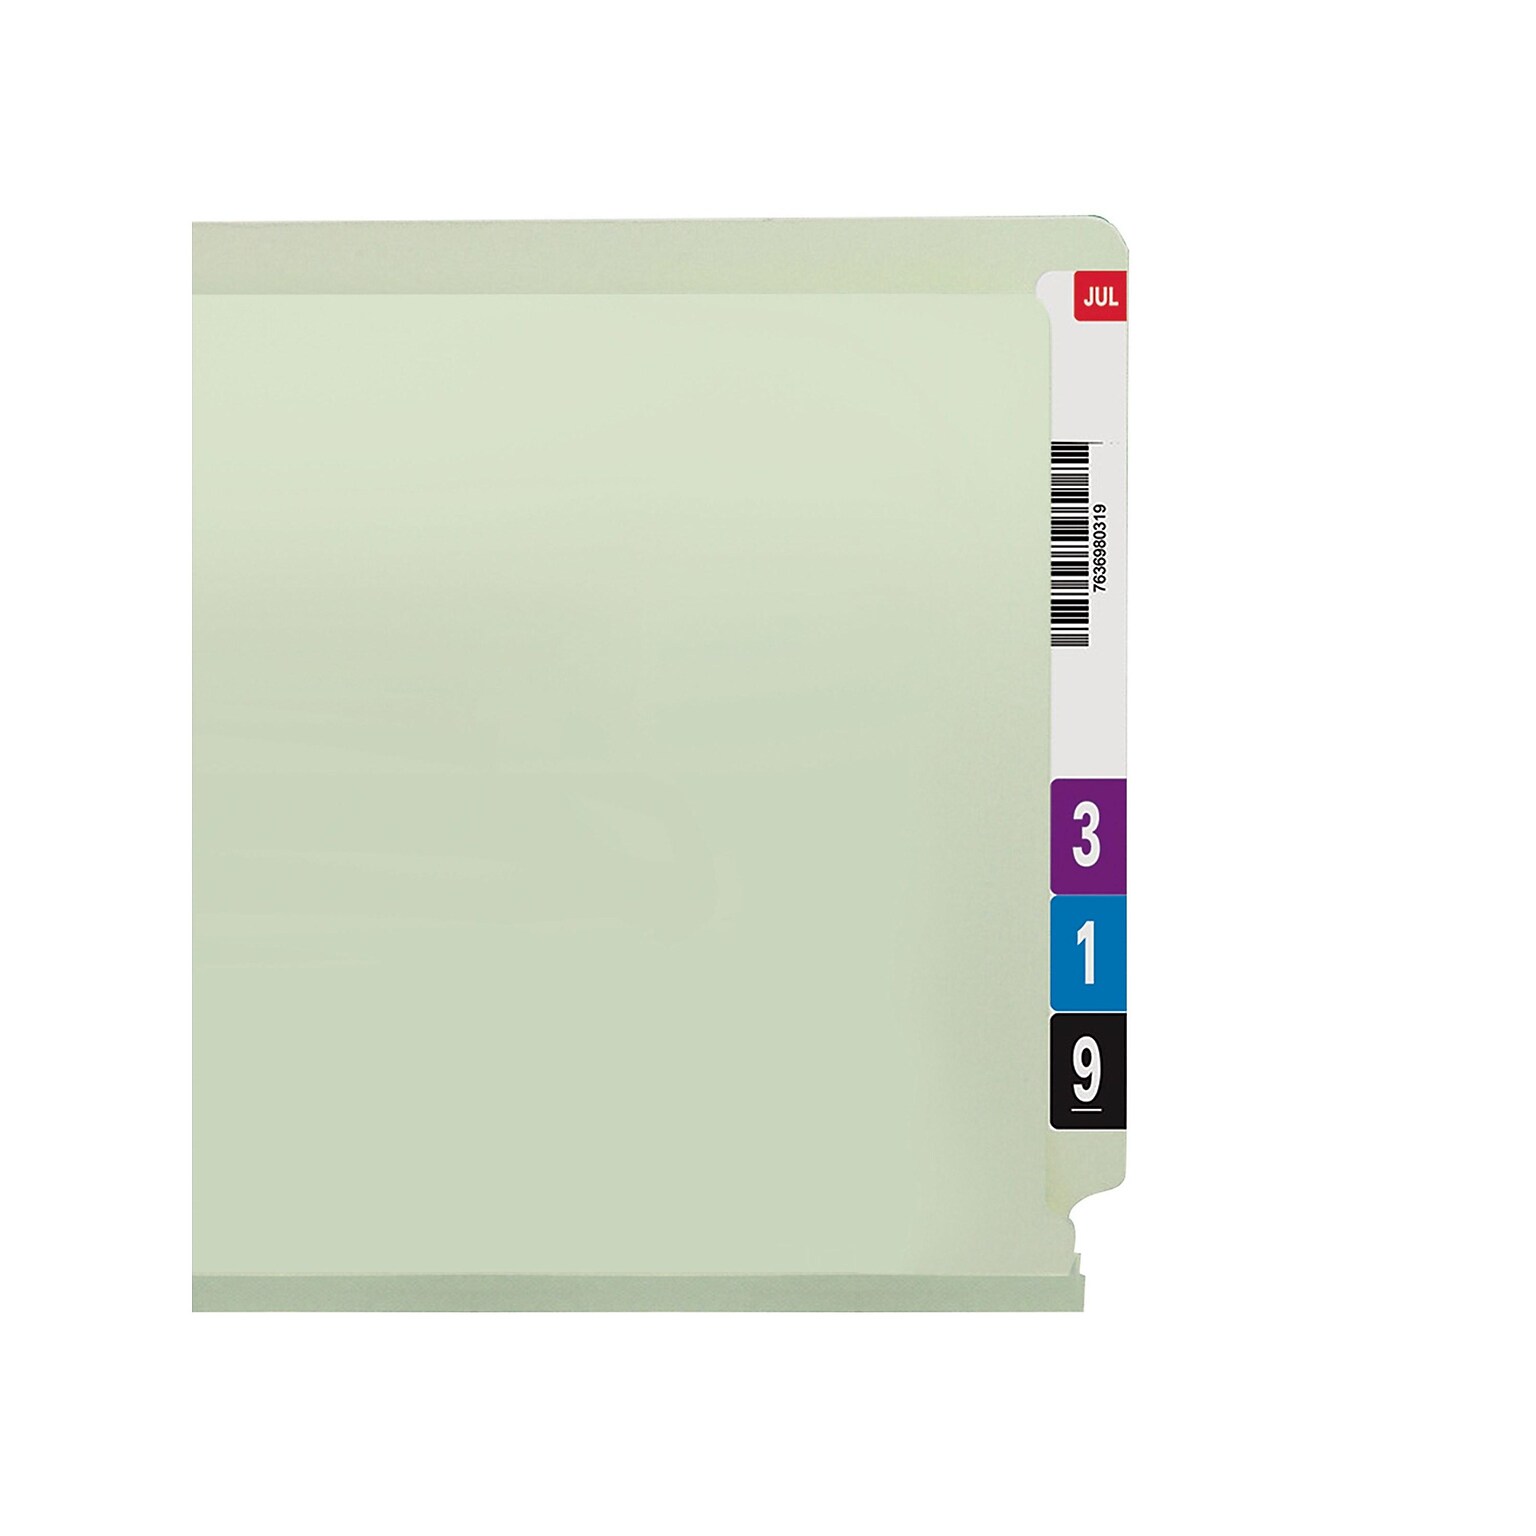 Smead End-Tab Pressboard Fastener File Folder with SafeSHIELD Fastener, Legal Size, Gray/Green, 25/Box (37705)